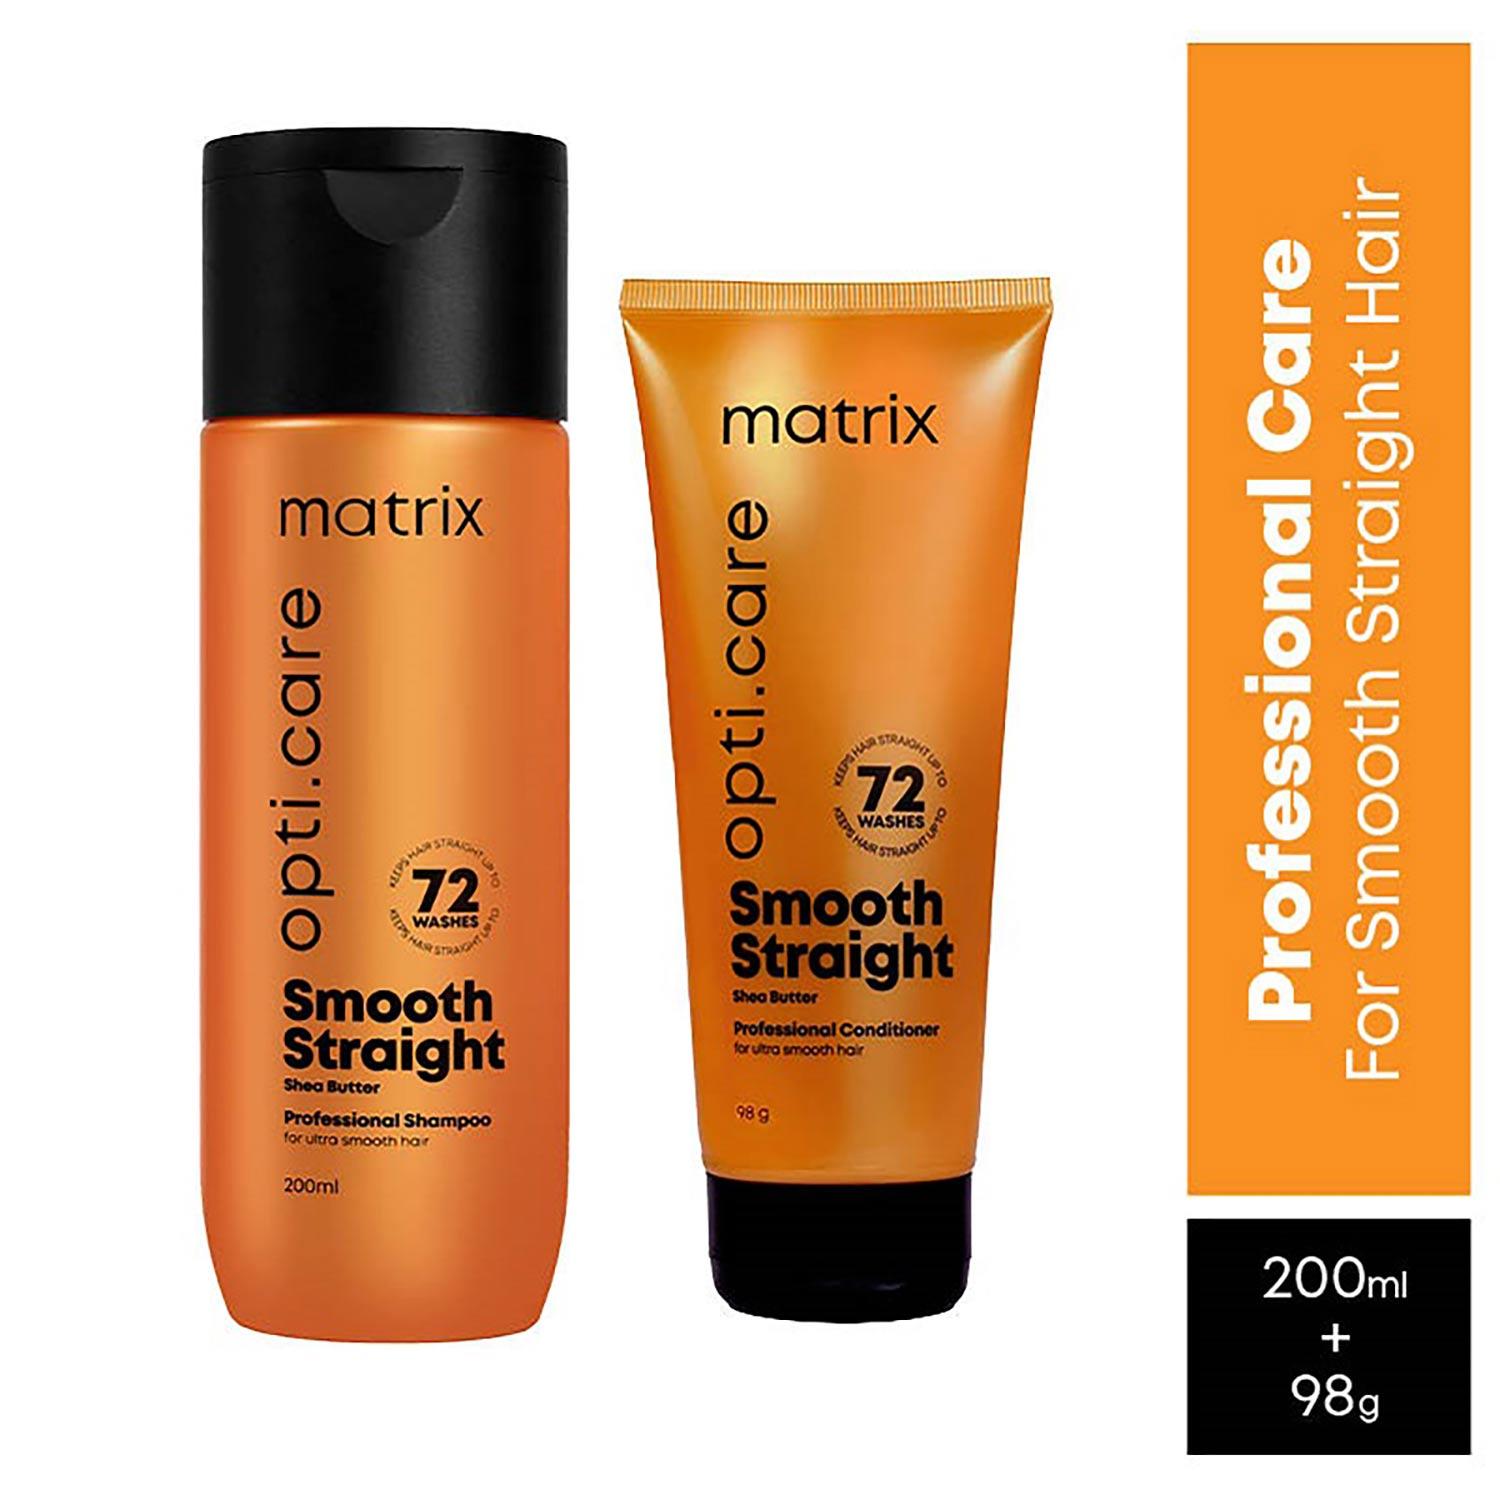 Matrix | Matrix Opti.Care Professional Shampoo and Conditioner for Salon Smooth Hair (200 ml + 98 g) Combo